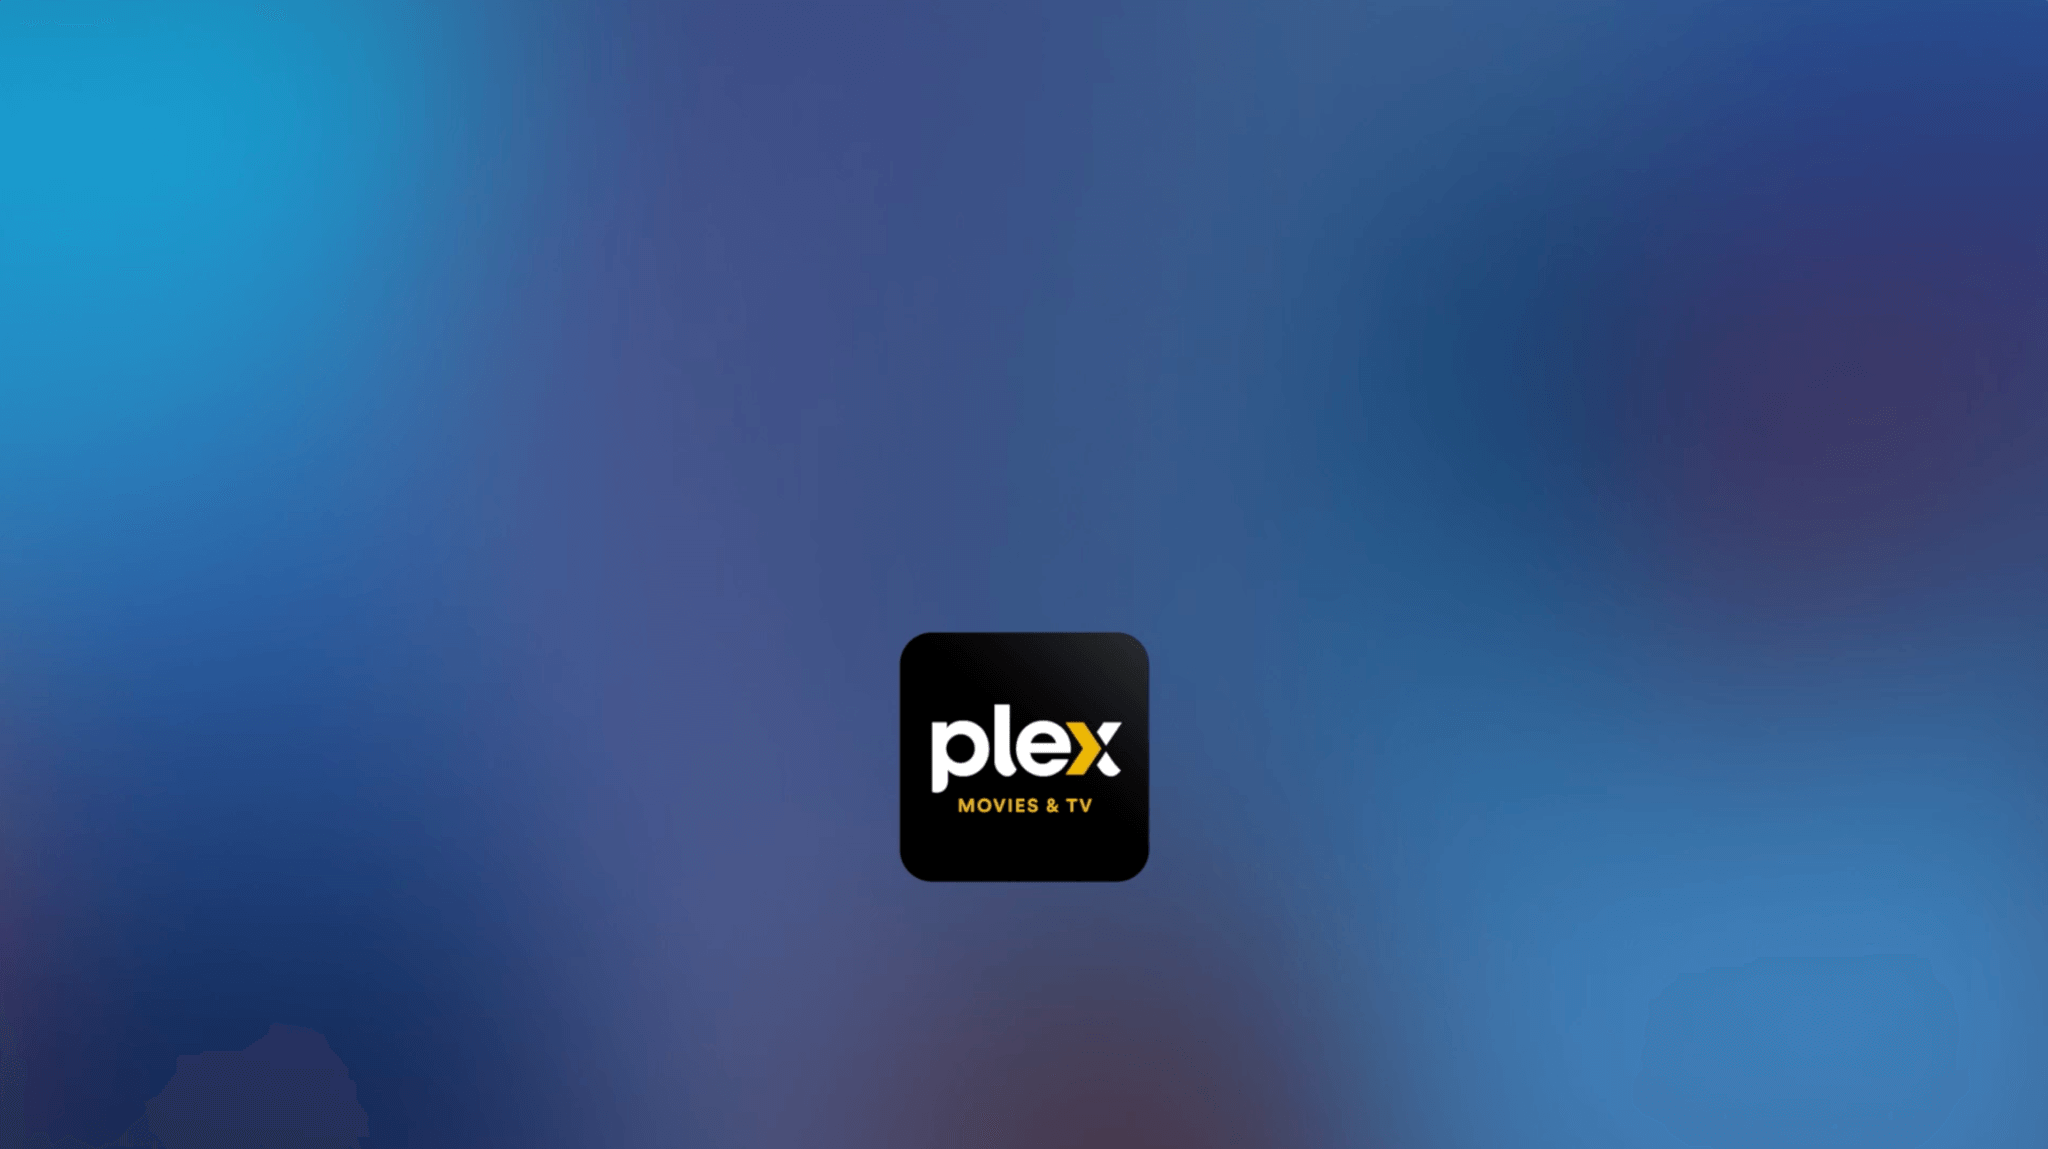 Plex Live TV